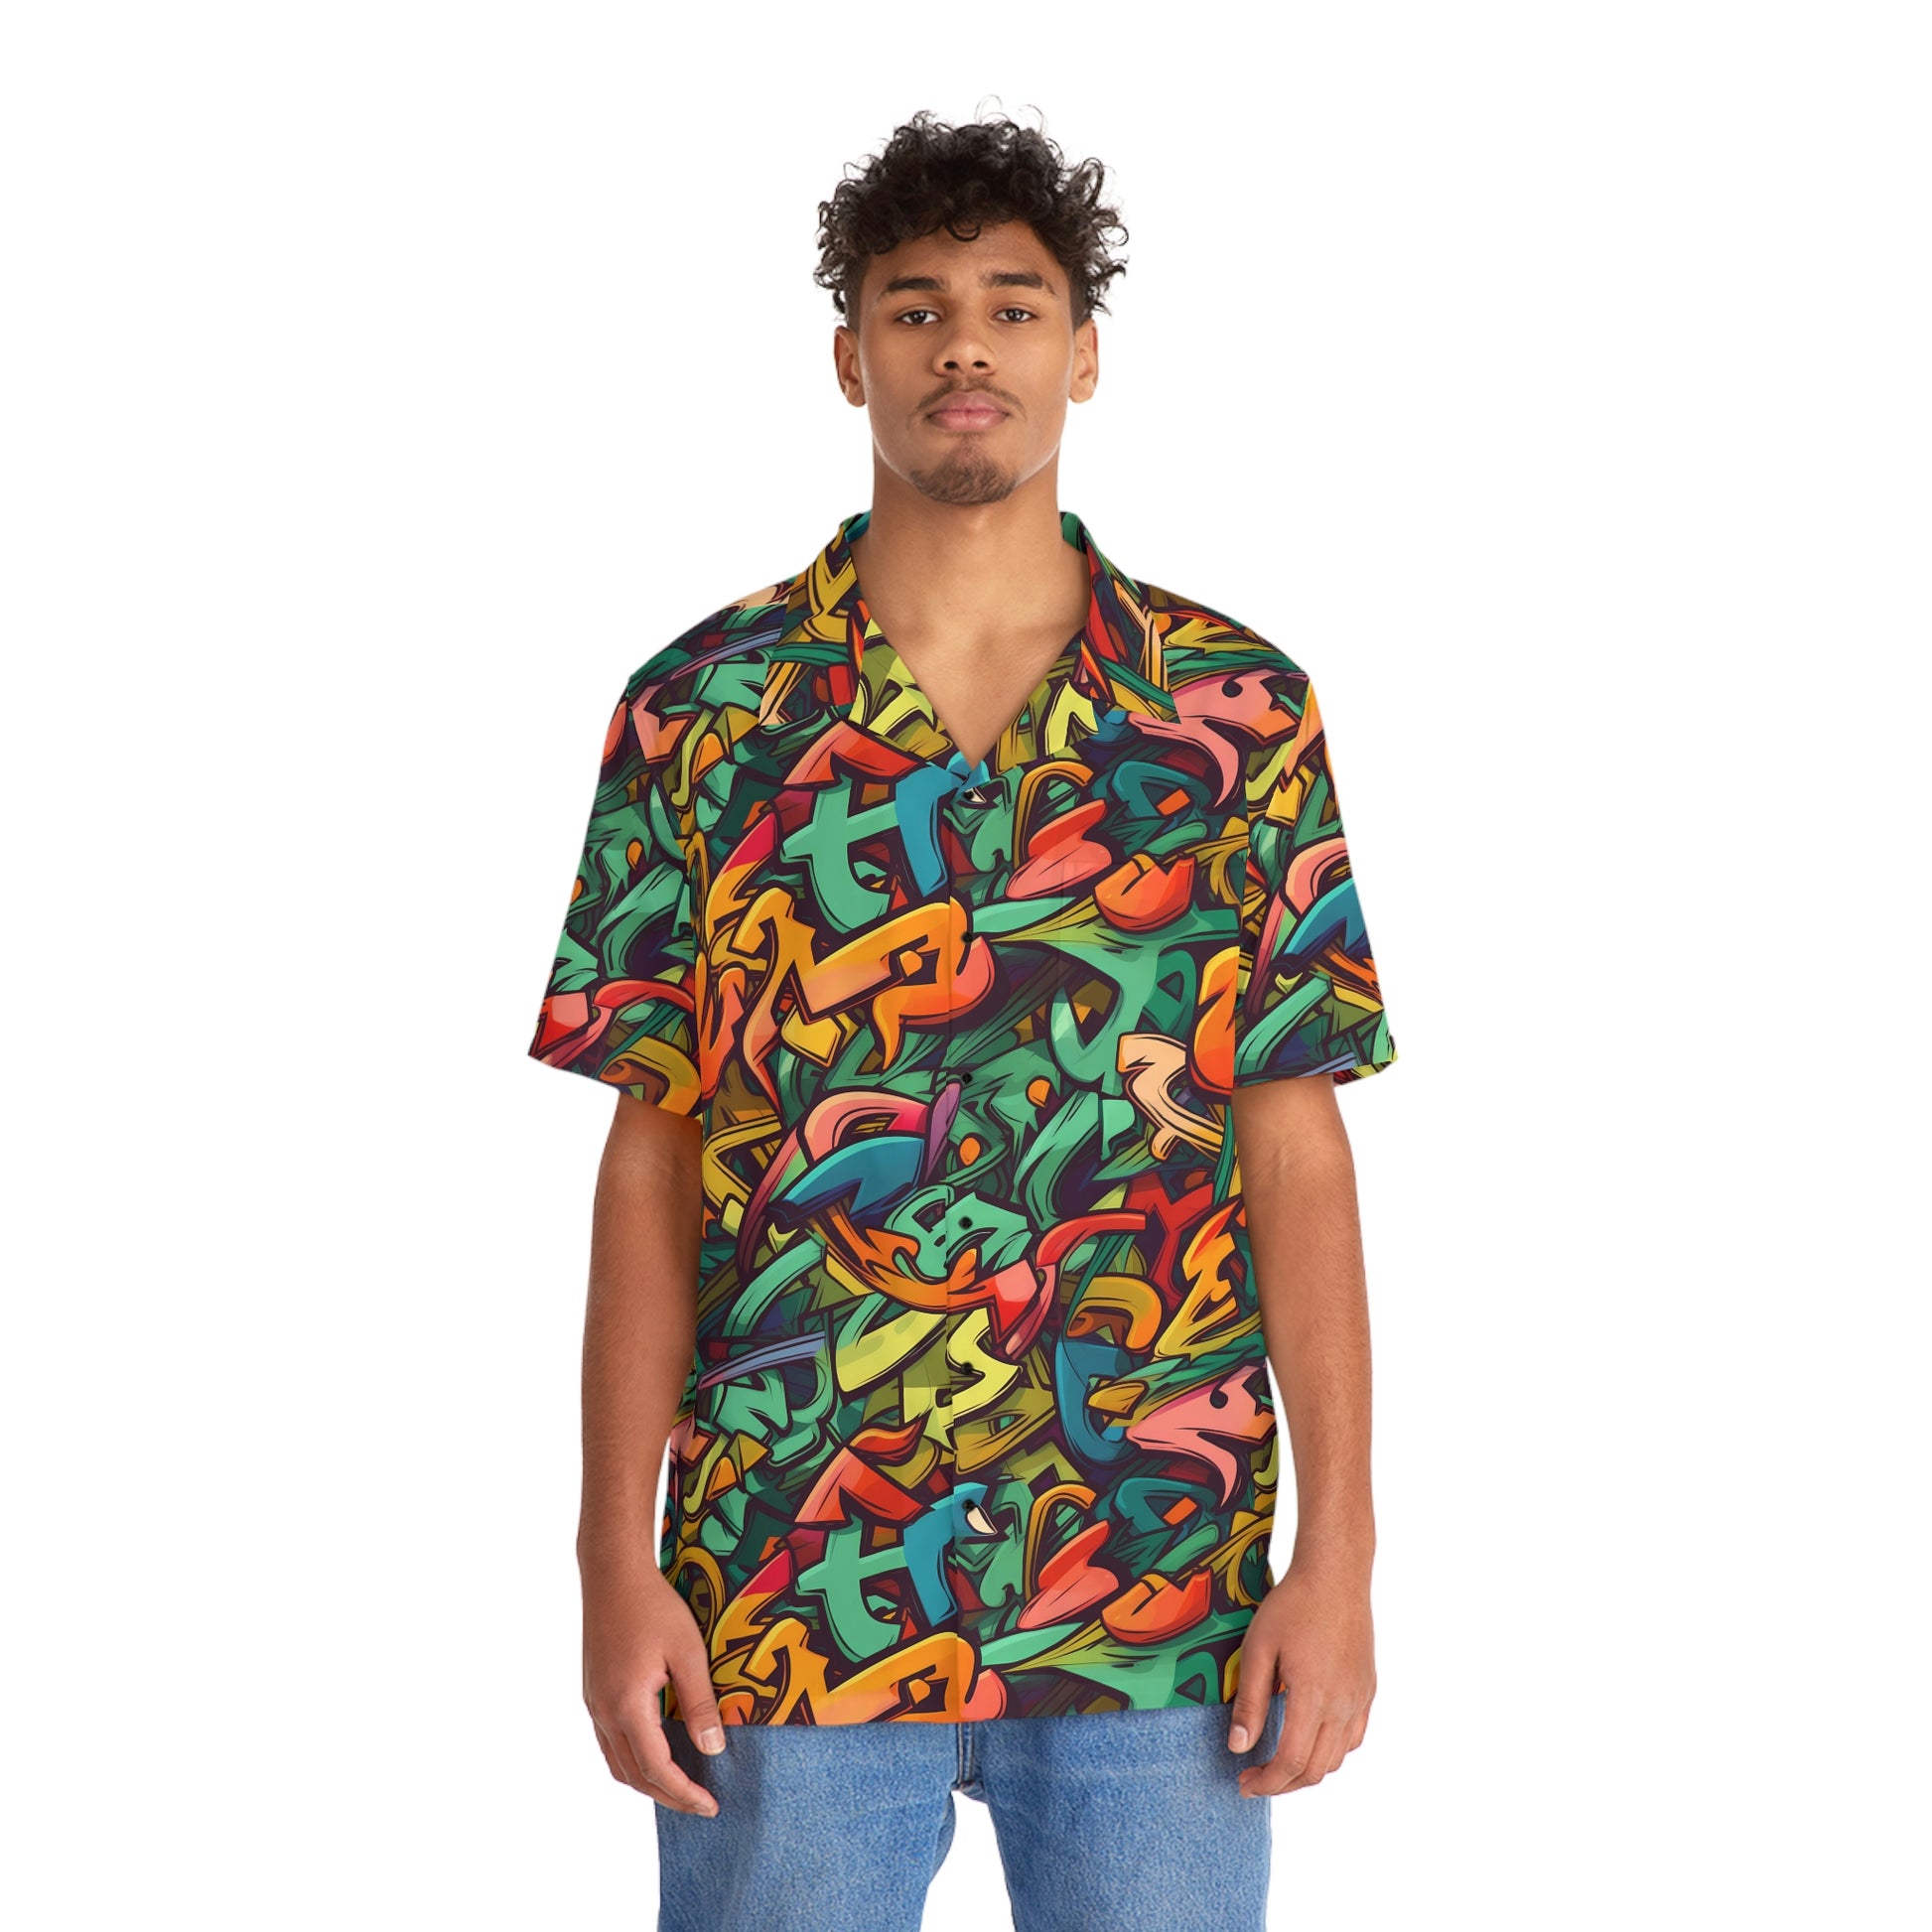 Graffiti Wildstyle (Brooklyn) Aloha Shirt by Studio Ten Design